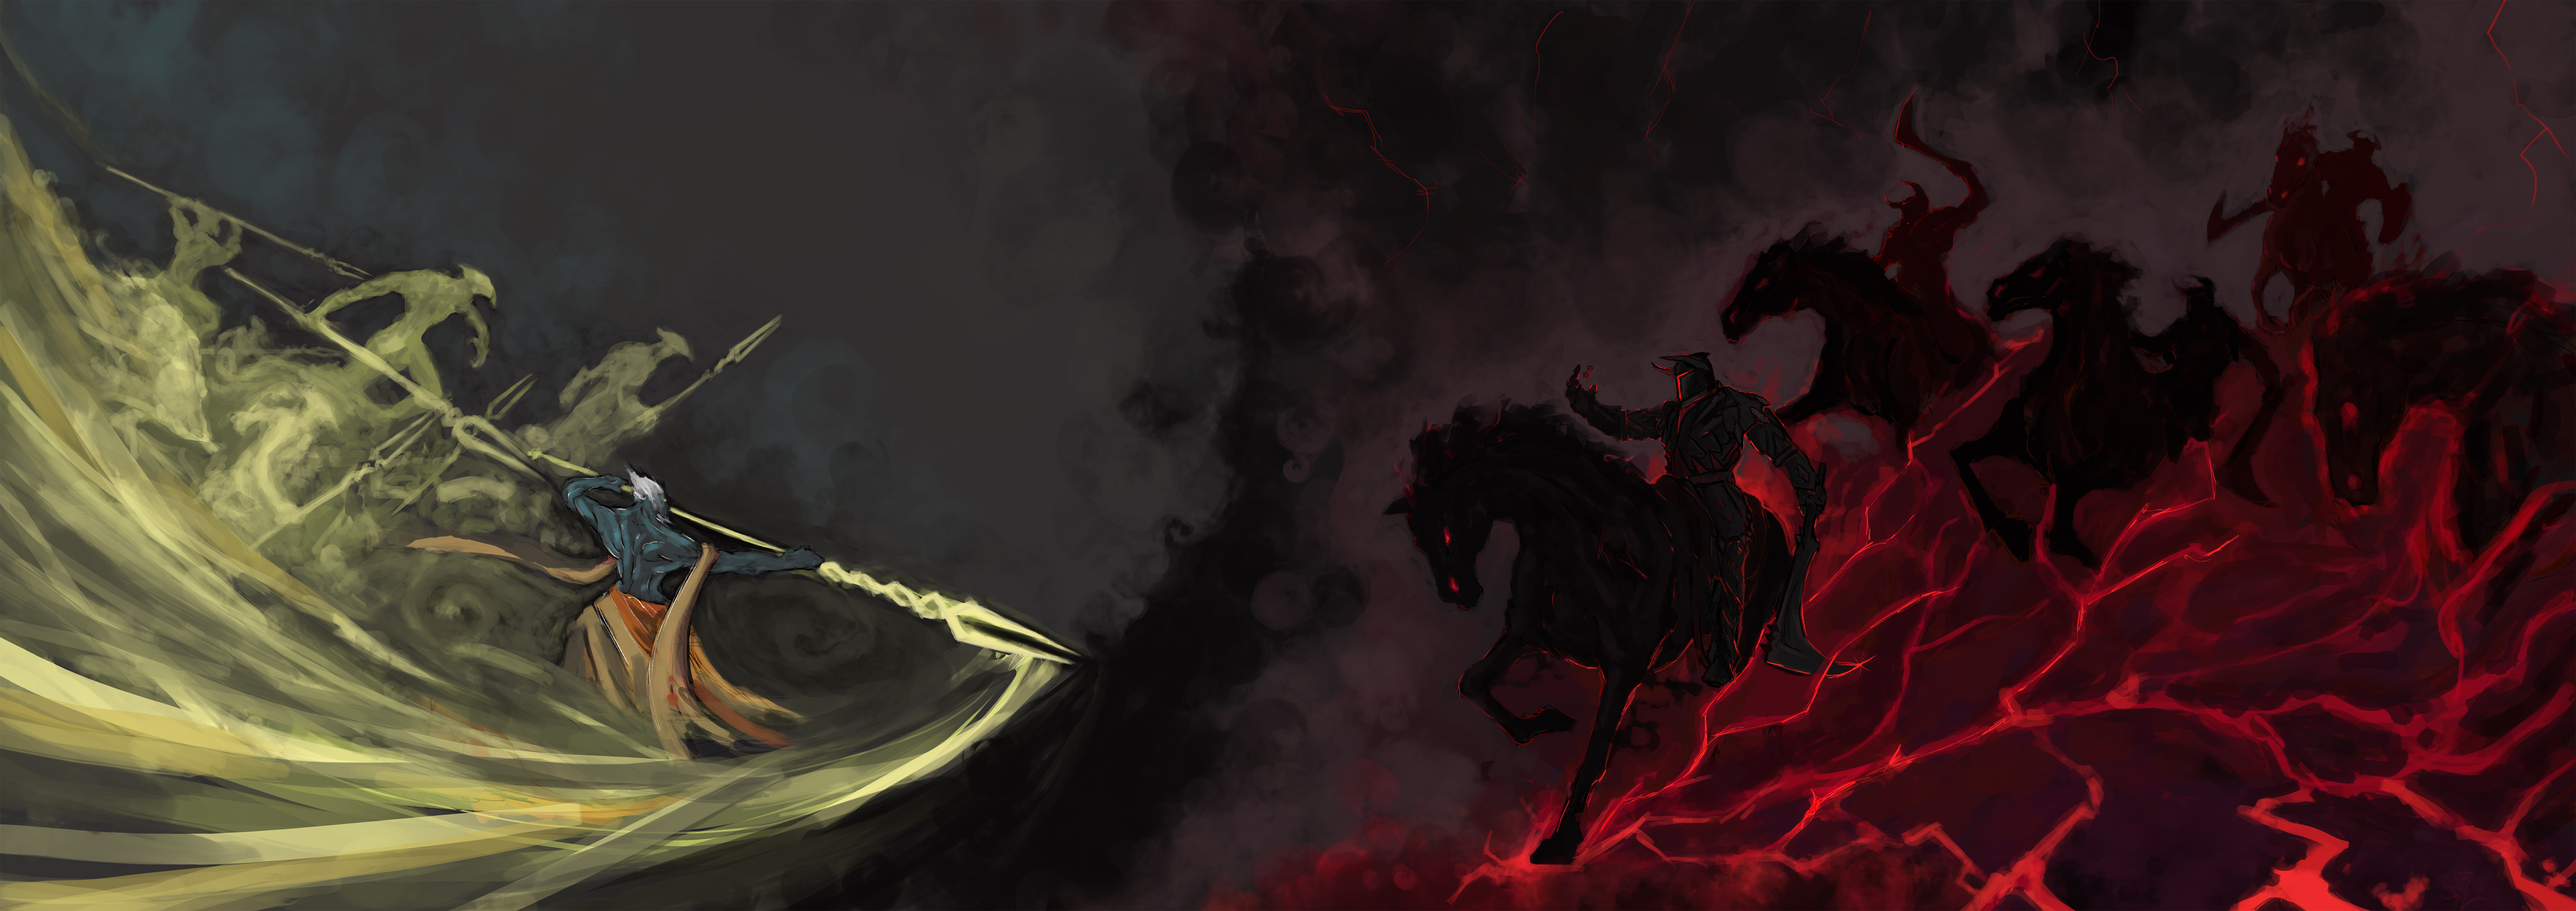 fondo de pantalla para 2 monitores,cg artwork,demonio,caballo,oscuridad,ilustración